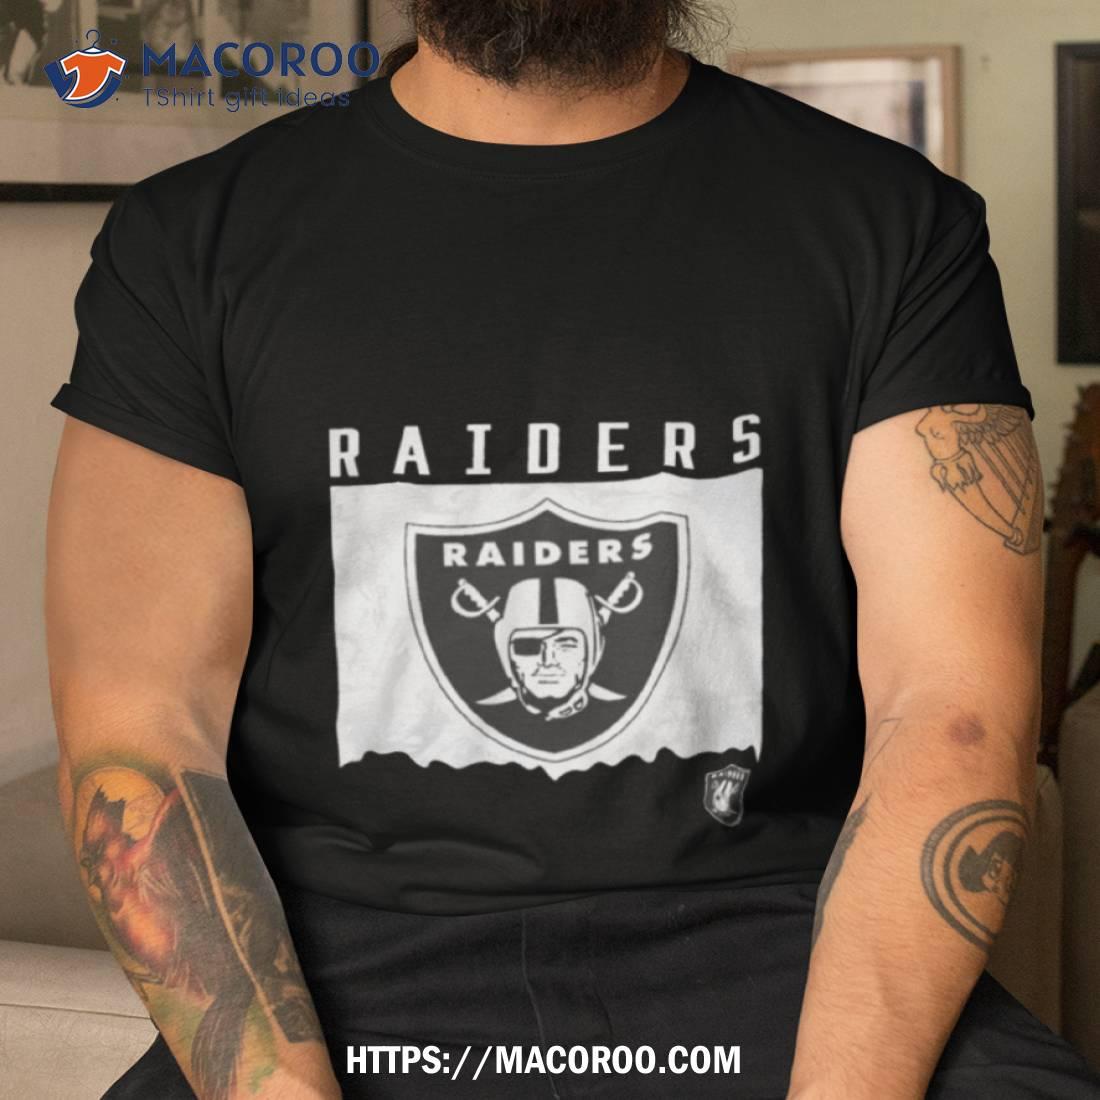 *NEW* NFL Las Vegas Raiders T-shirt, Cotton Blend, Gray, M